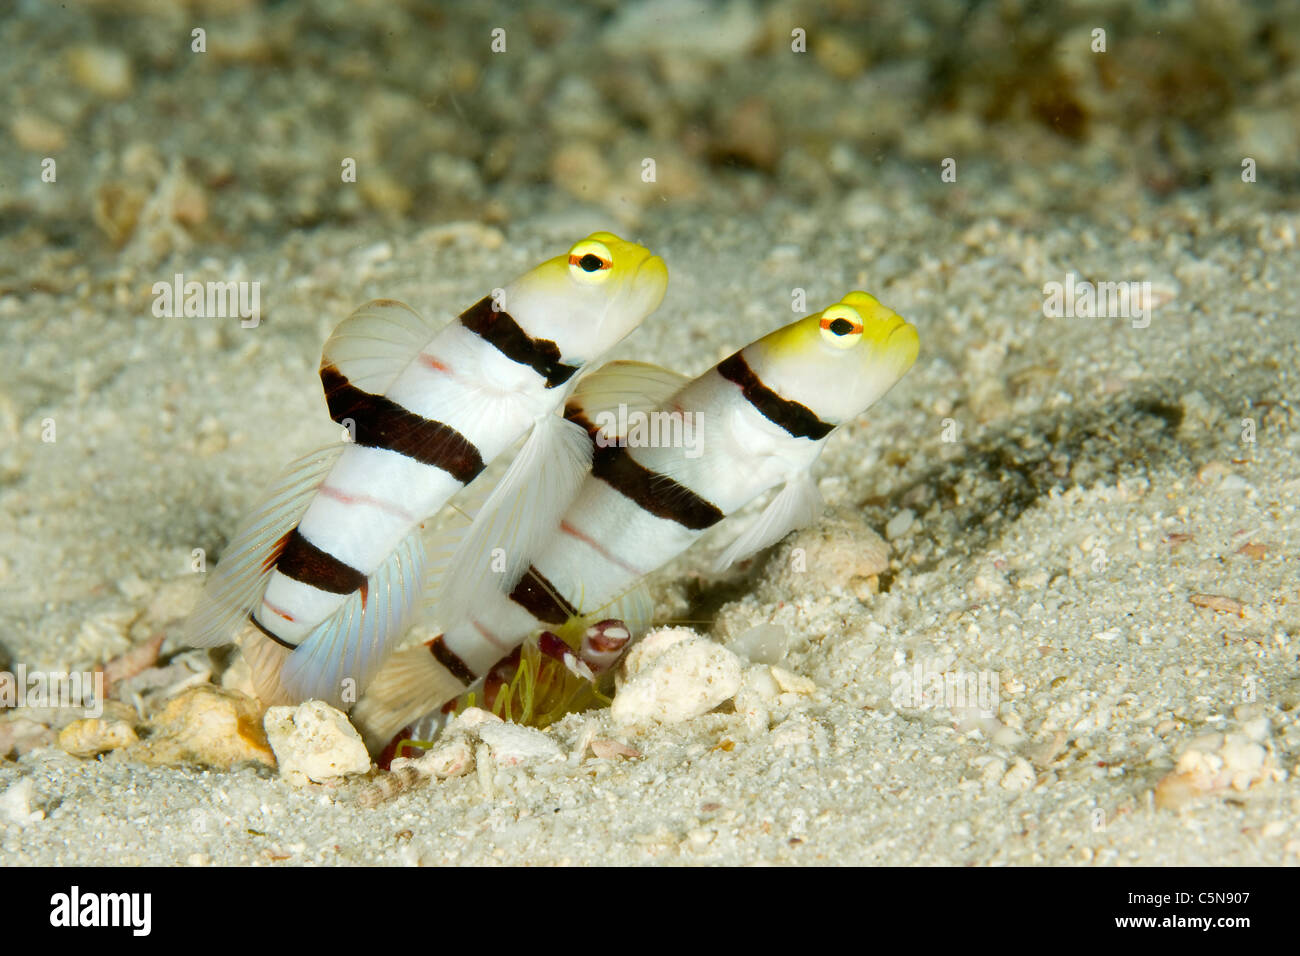 Symbiotic between Yellownose Prawn Ghoby and Pistol Shrimp, Stonogobiops xanthorhinica, Alpheus randalli, Indian Ocean, Maldives Stock Photo